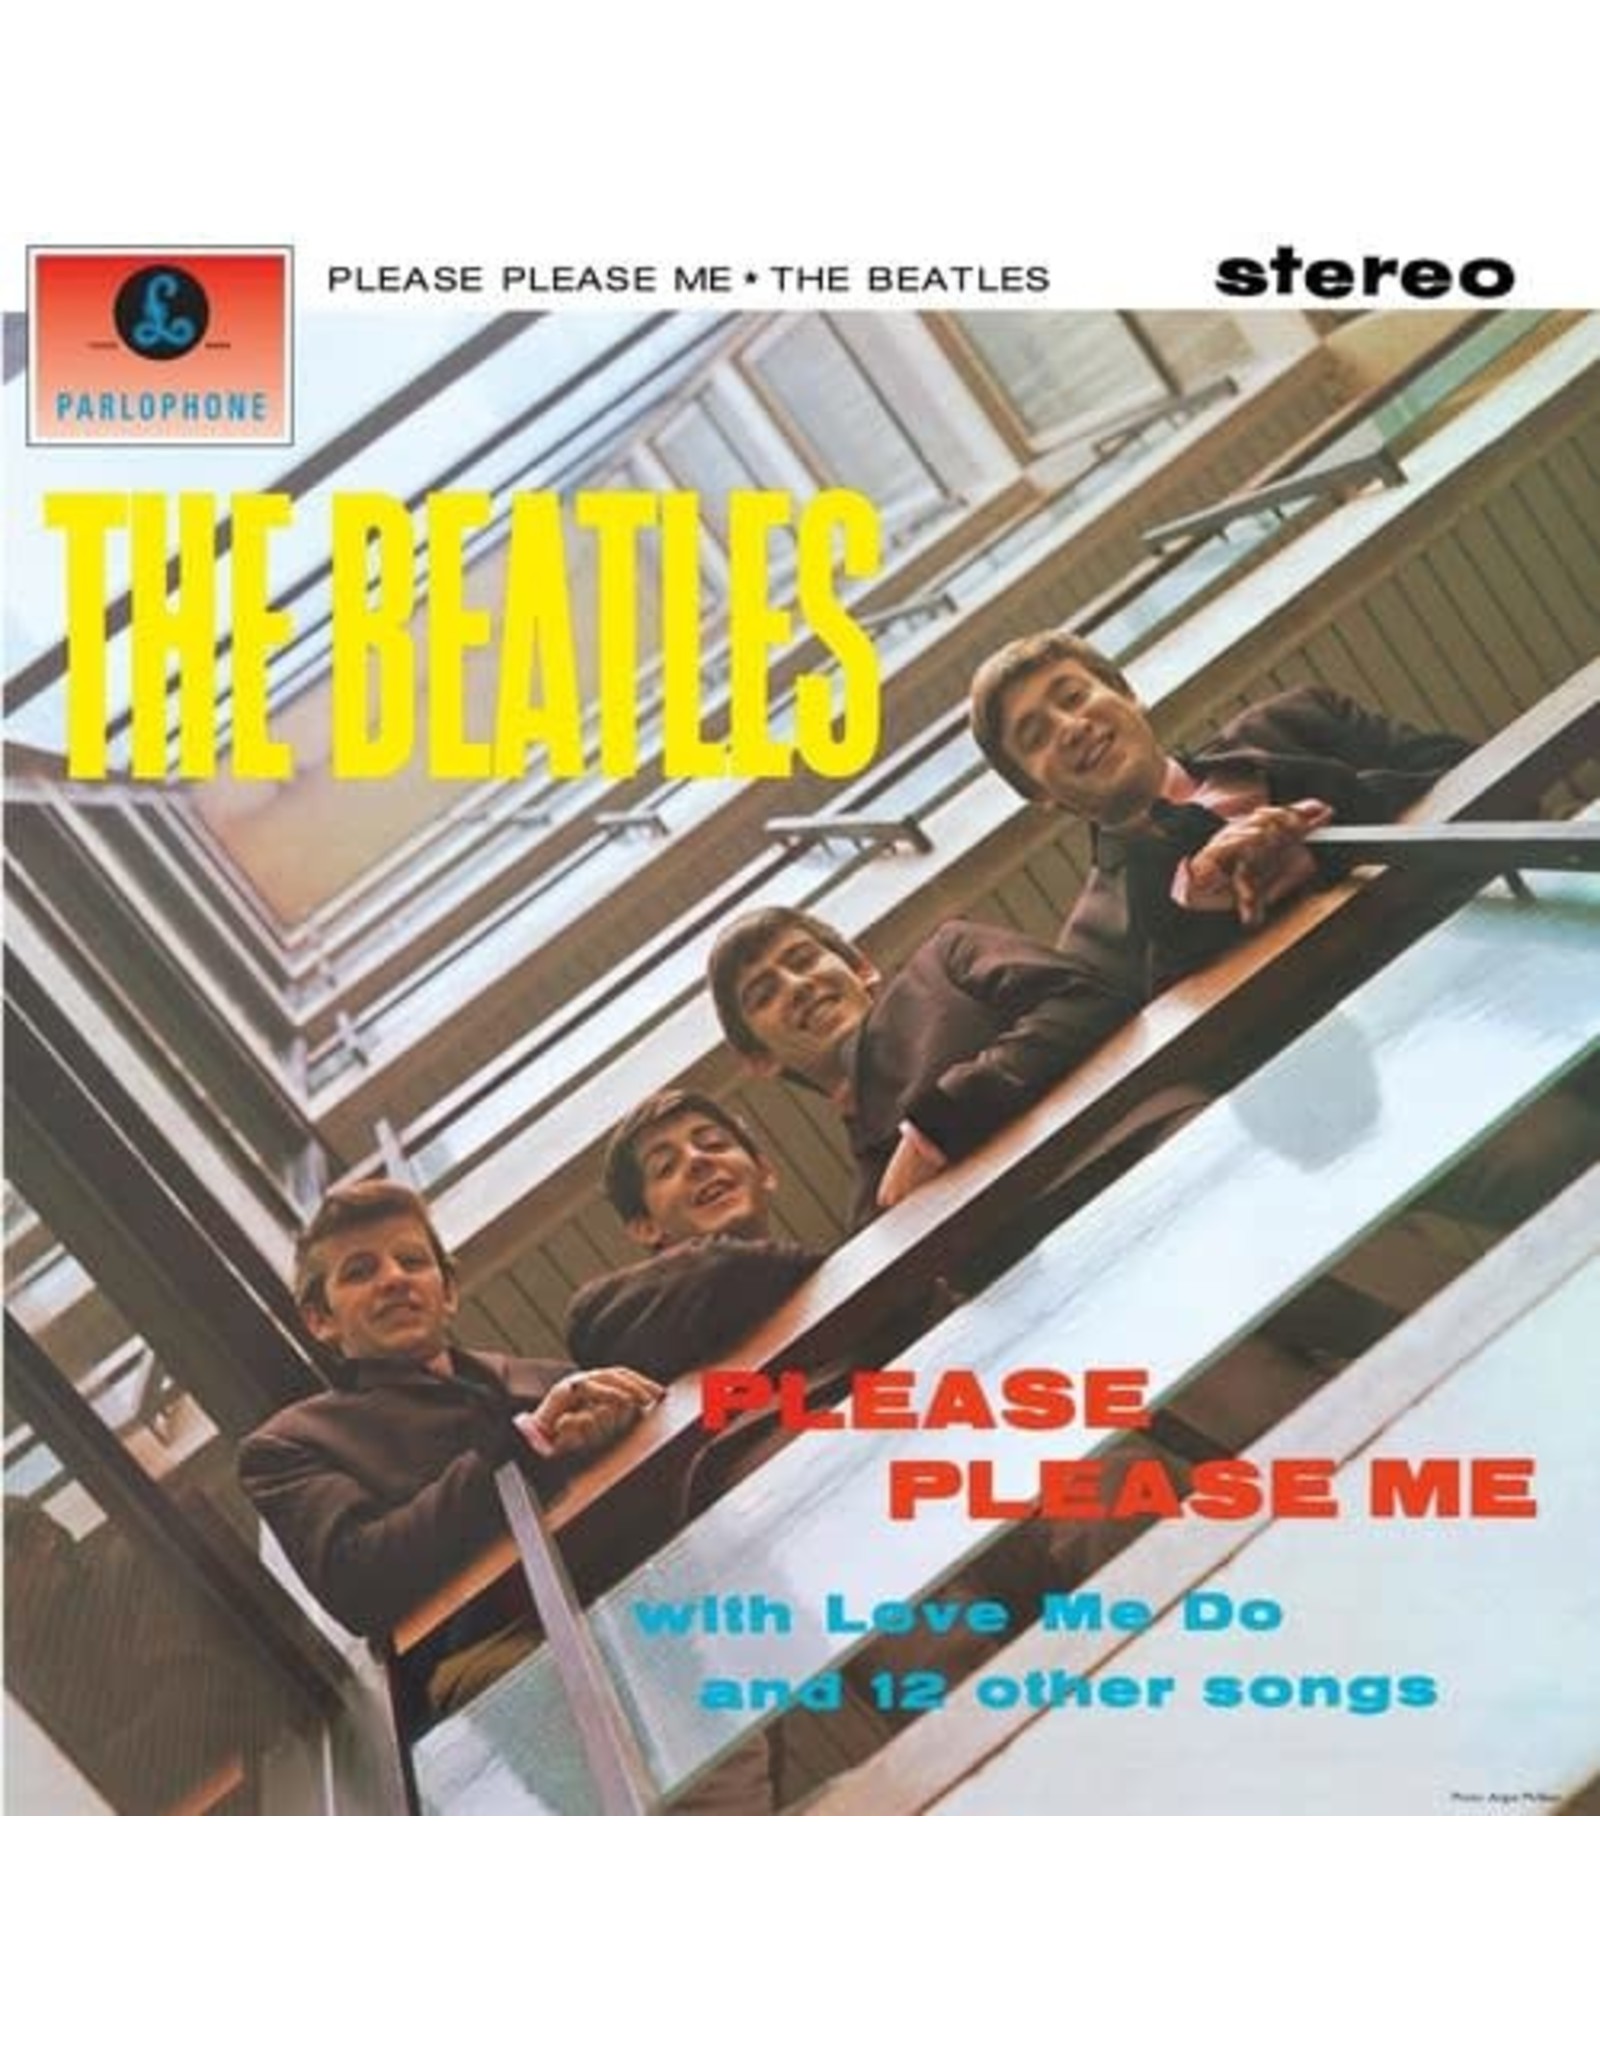 Beatles - Please Please Me (2009 Stereo Mix)